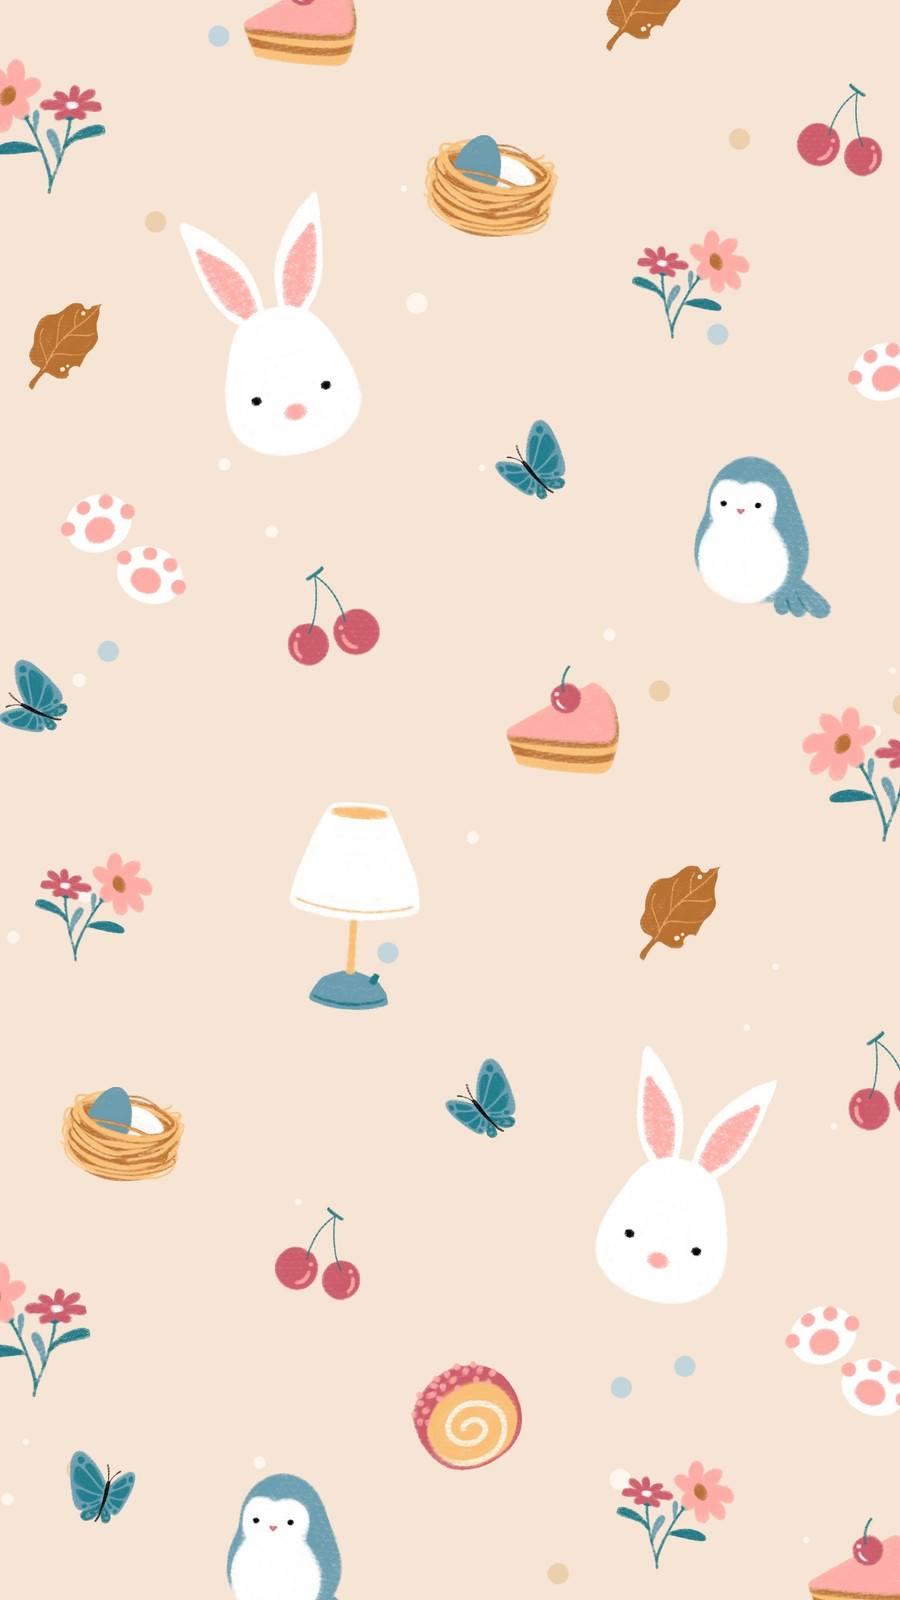 Customize 2,593+ Cute Phone Wallpaper Templates Online - Canva